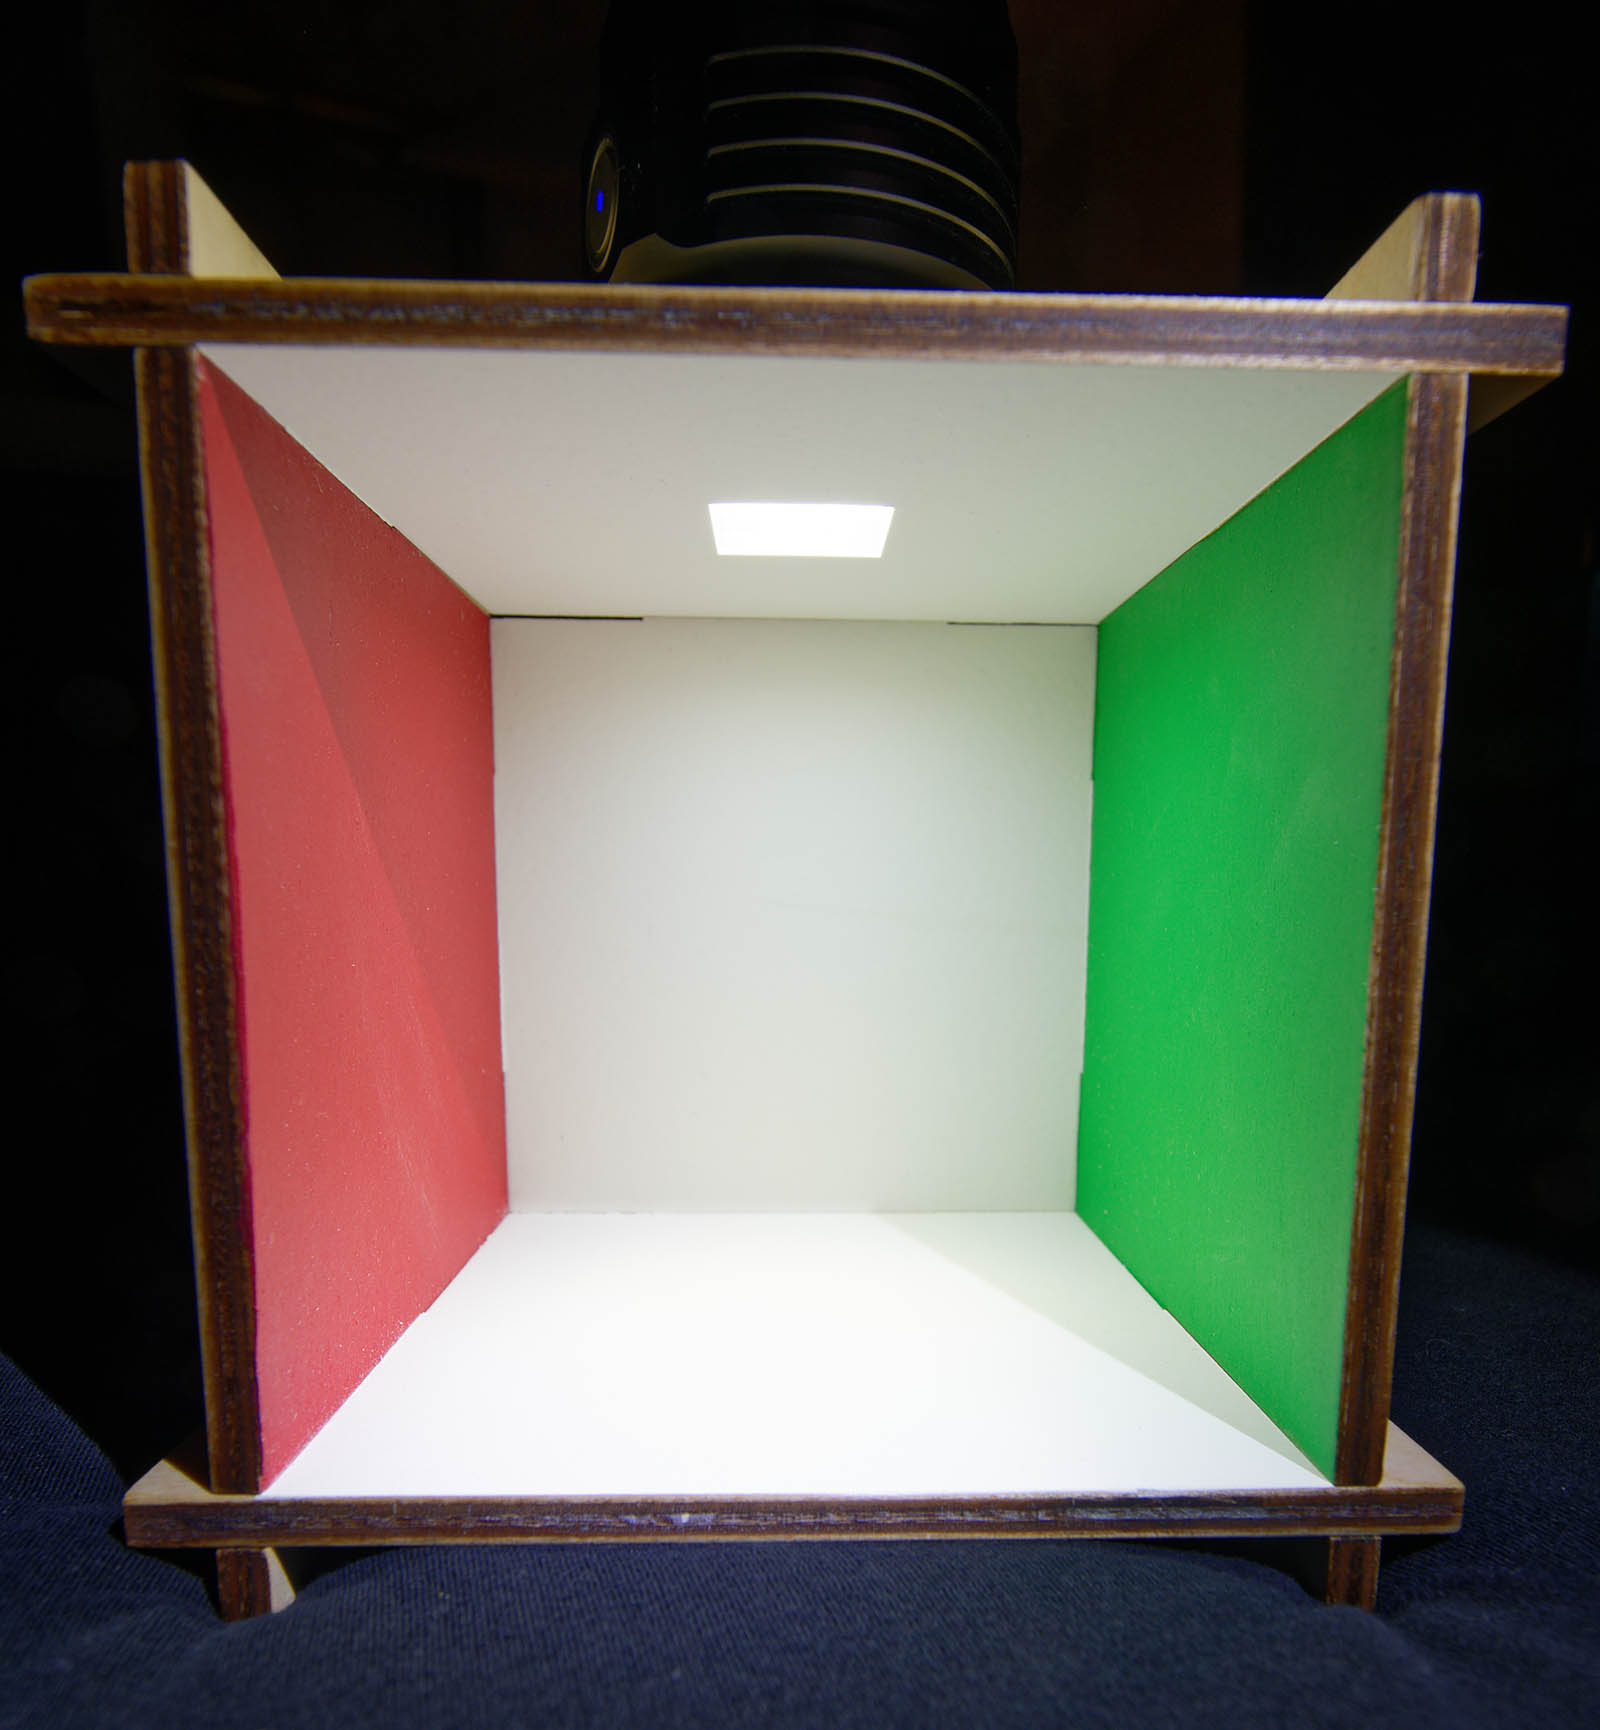 Illuminated Cornell Box